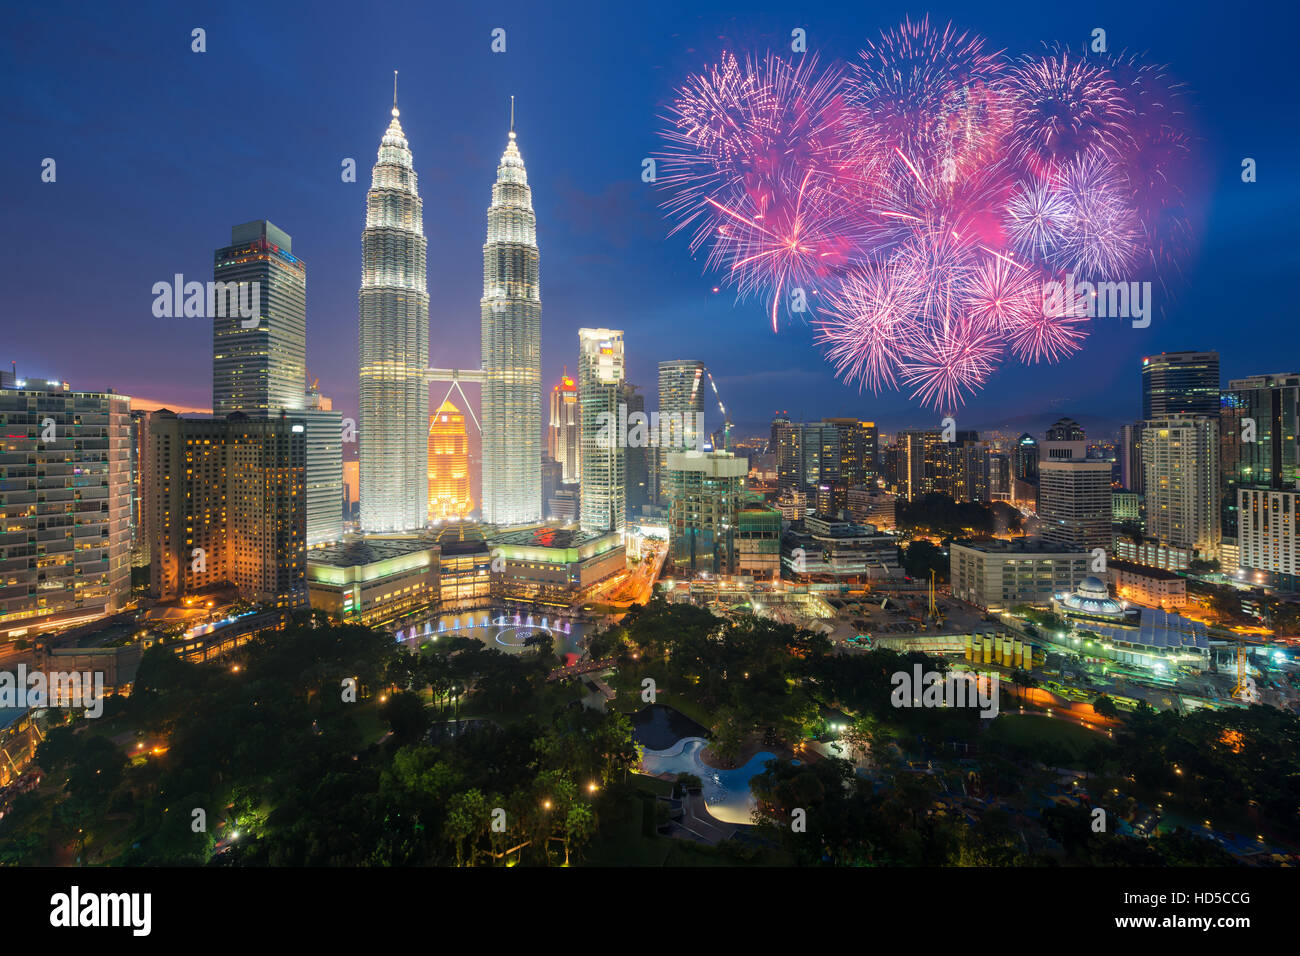 Kuala lumpur skyline with Fireworks celebration New year day 2017 or Malaysia Independence Day in Kuala lumpur, Malaysia. Stock Photo